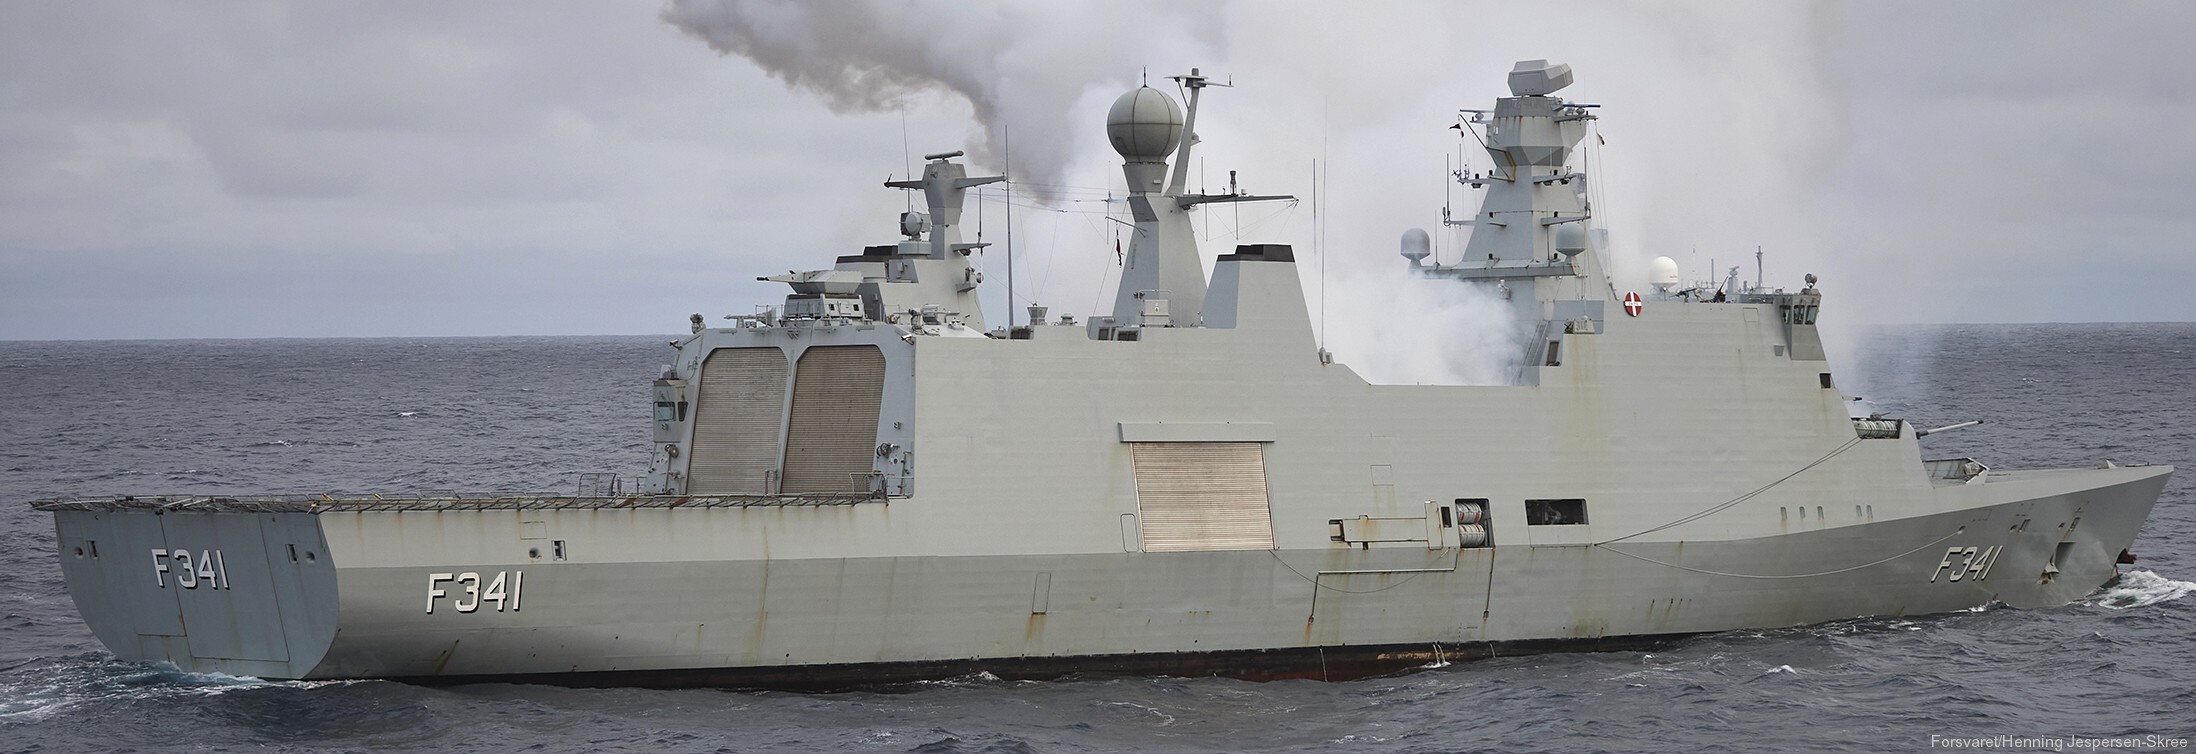 f-341 hdms absalon frigate royal danish navy søværnet forsvaret 10